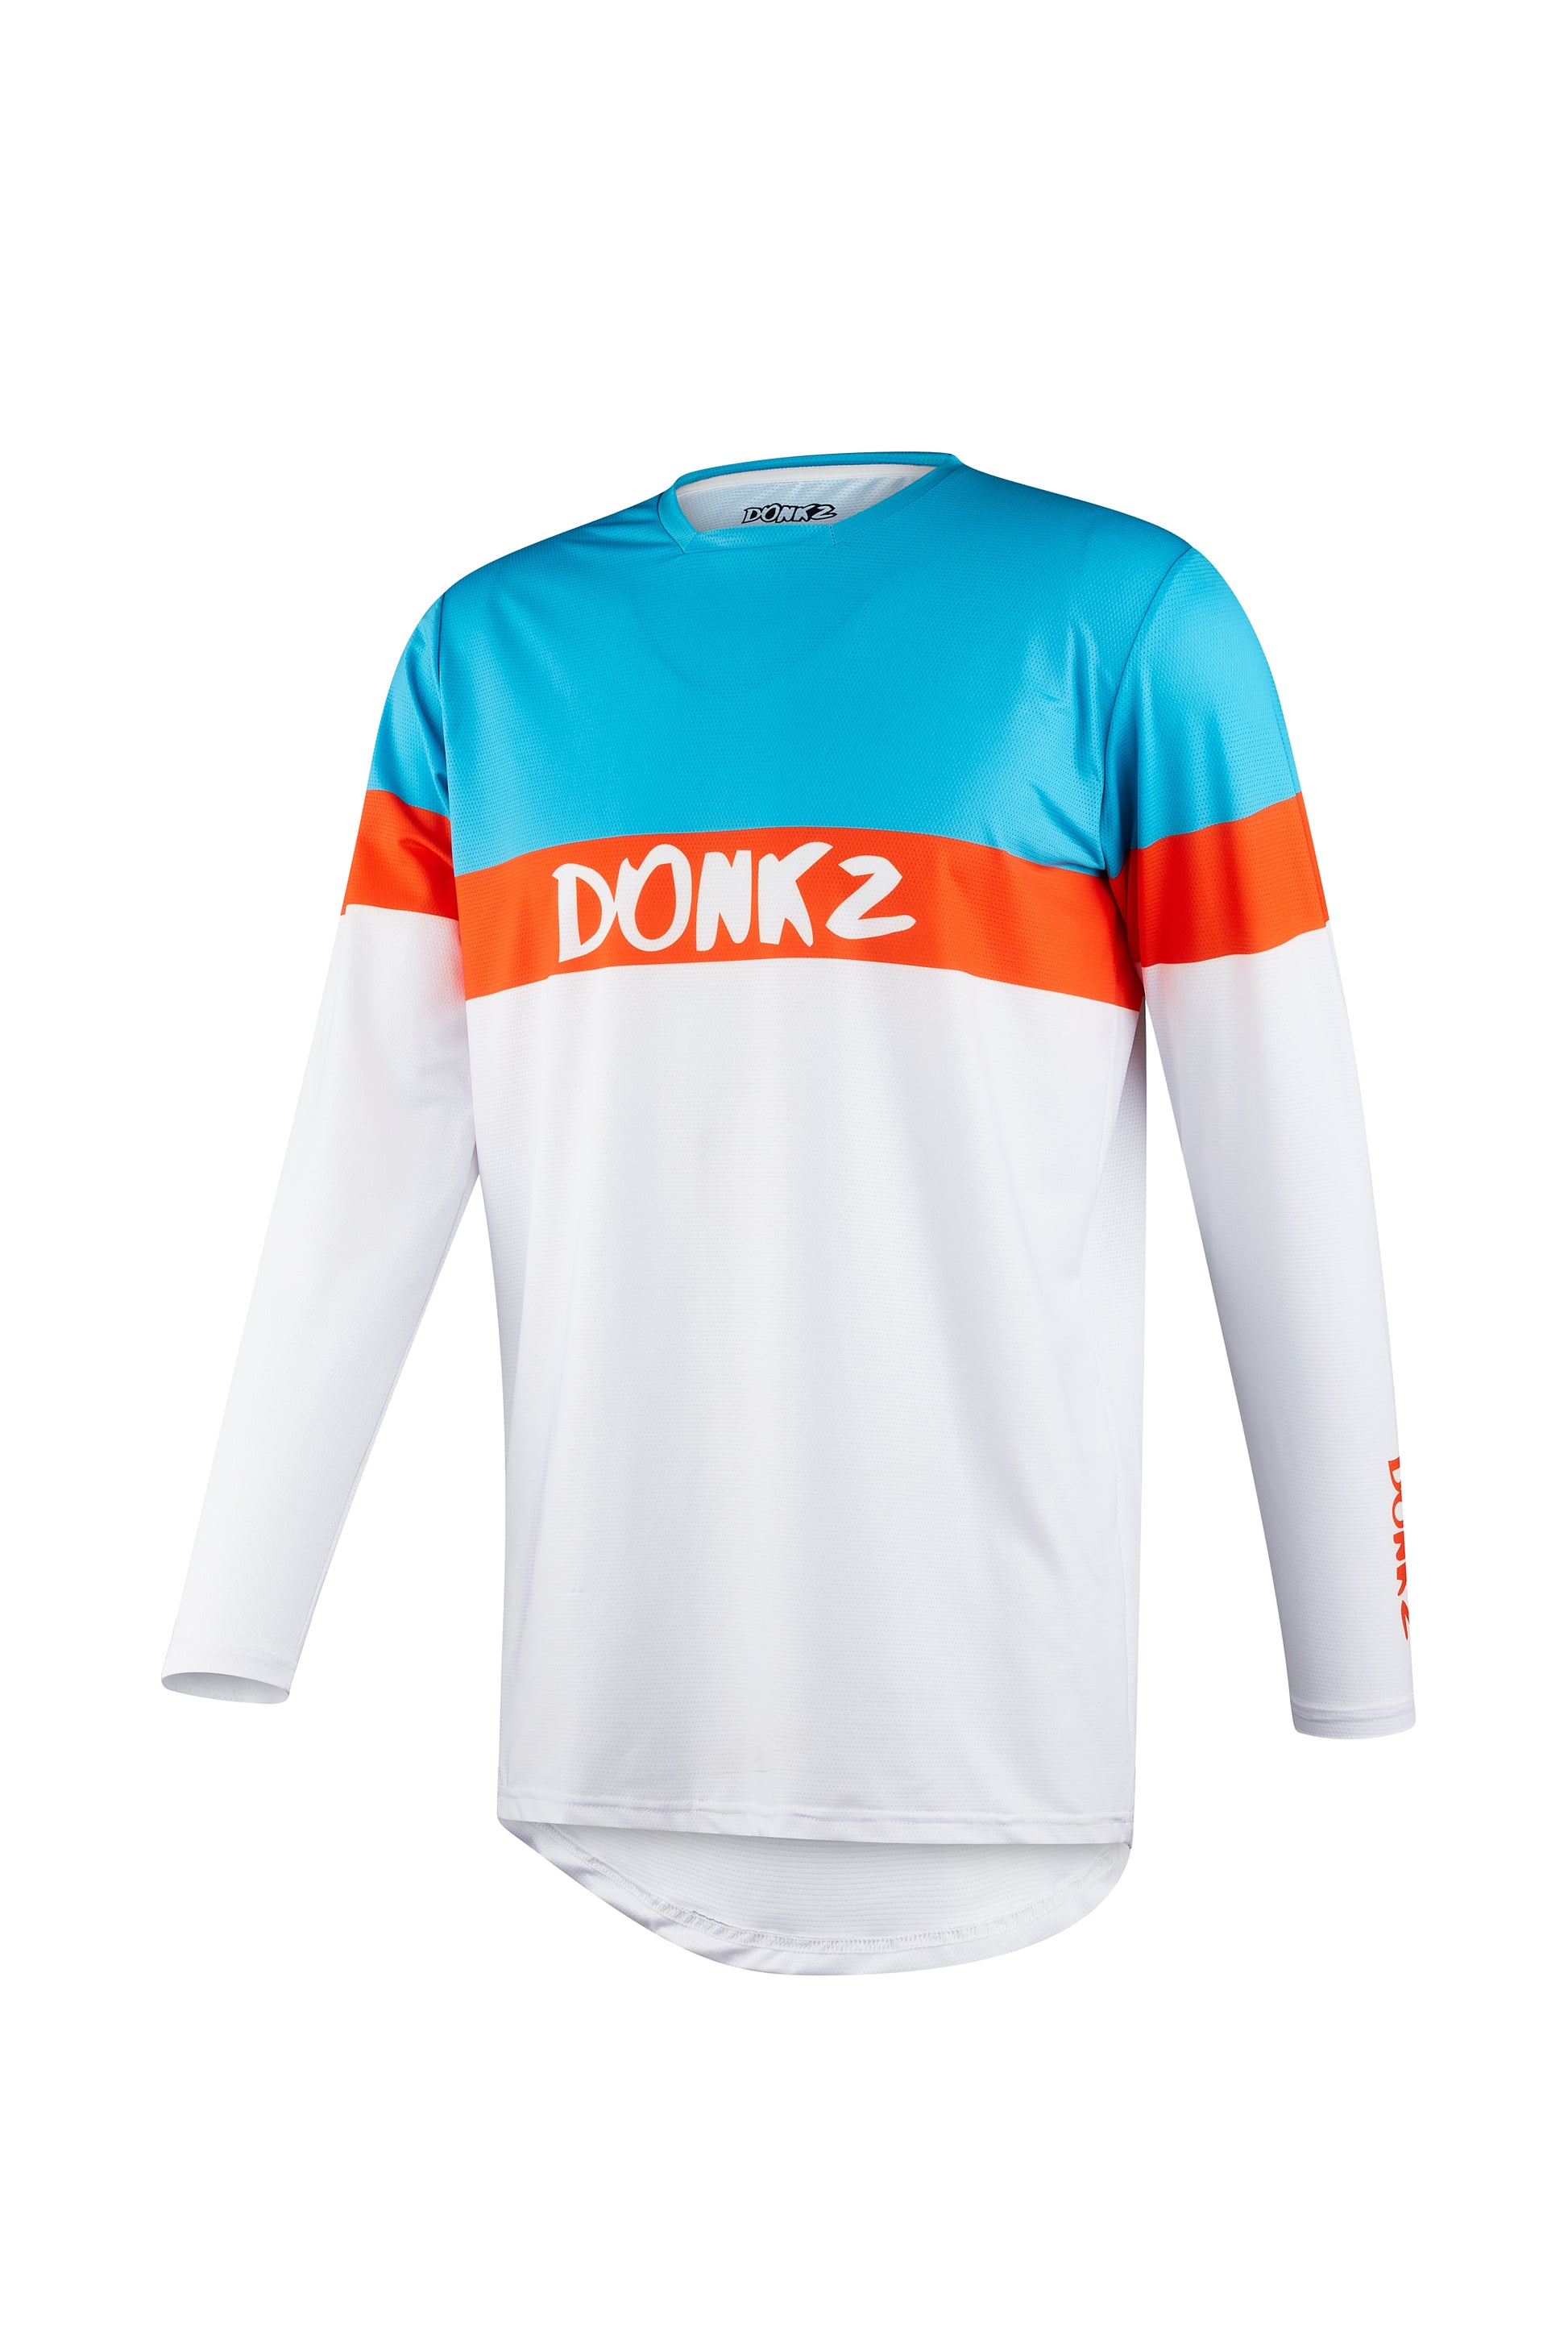 White, blue and orange MX / Enduro Donkz Racing jersey